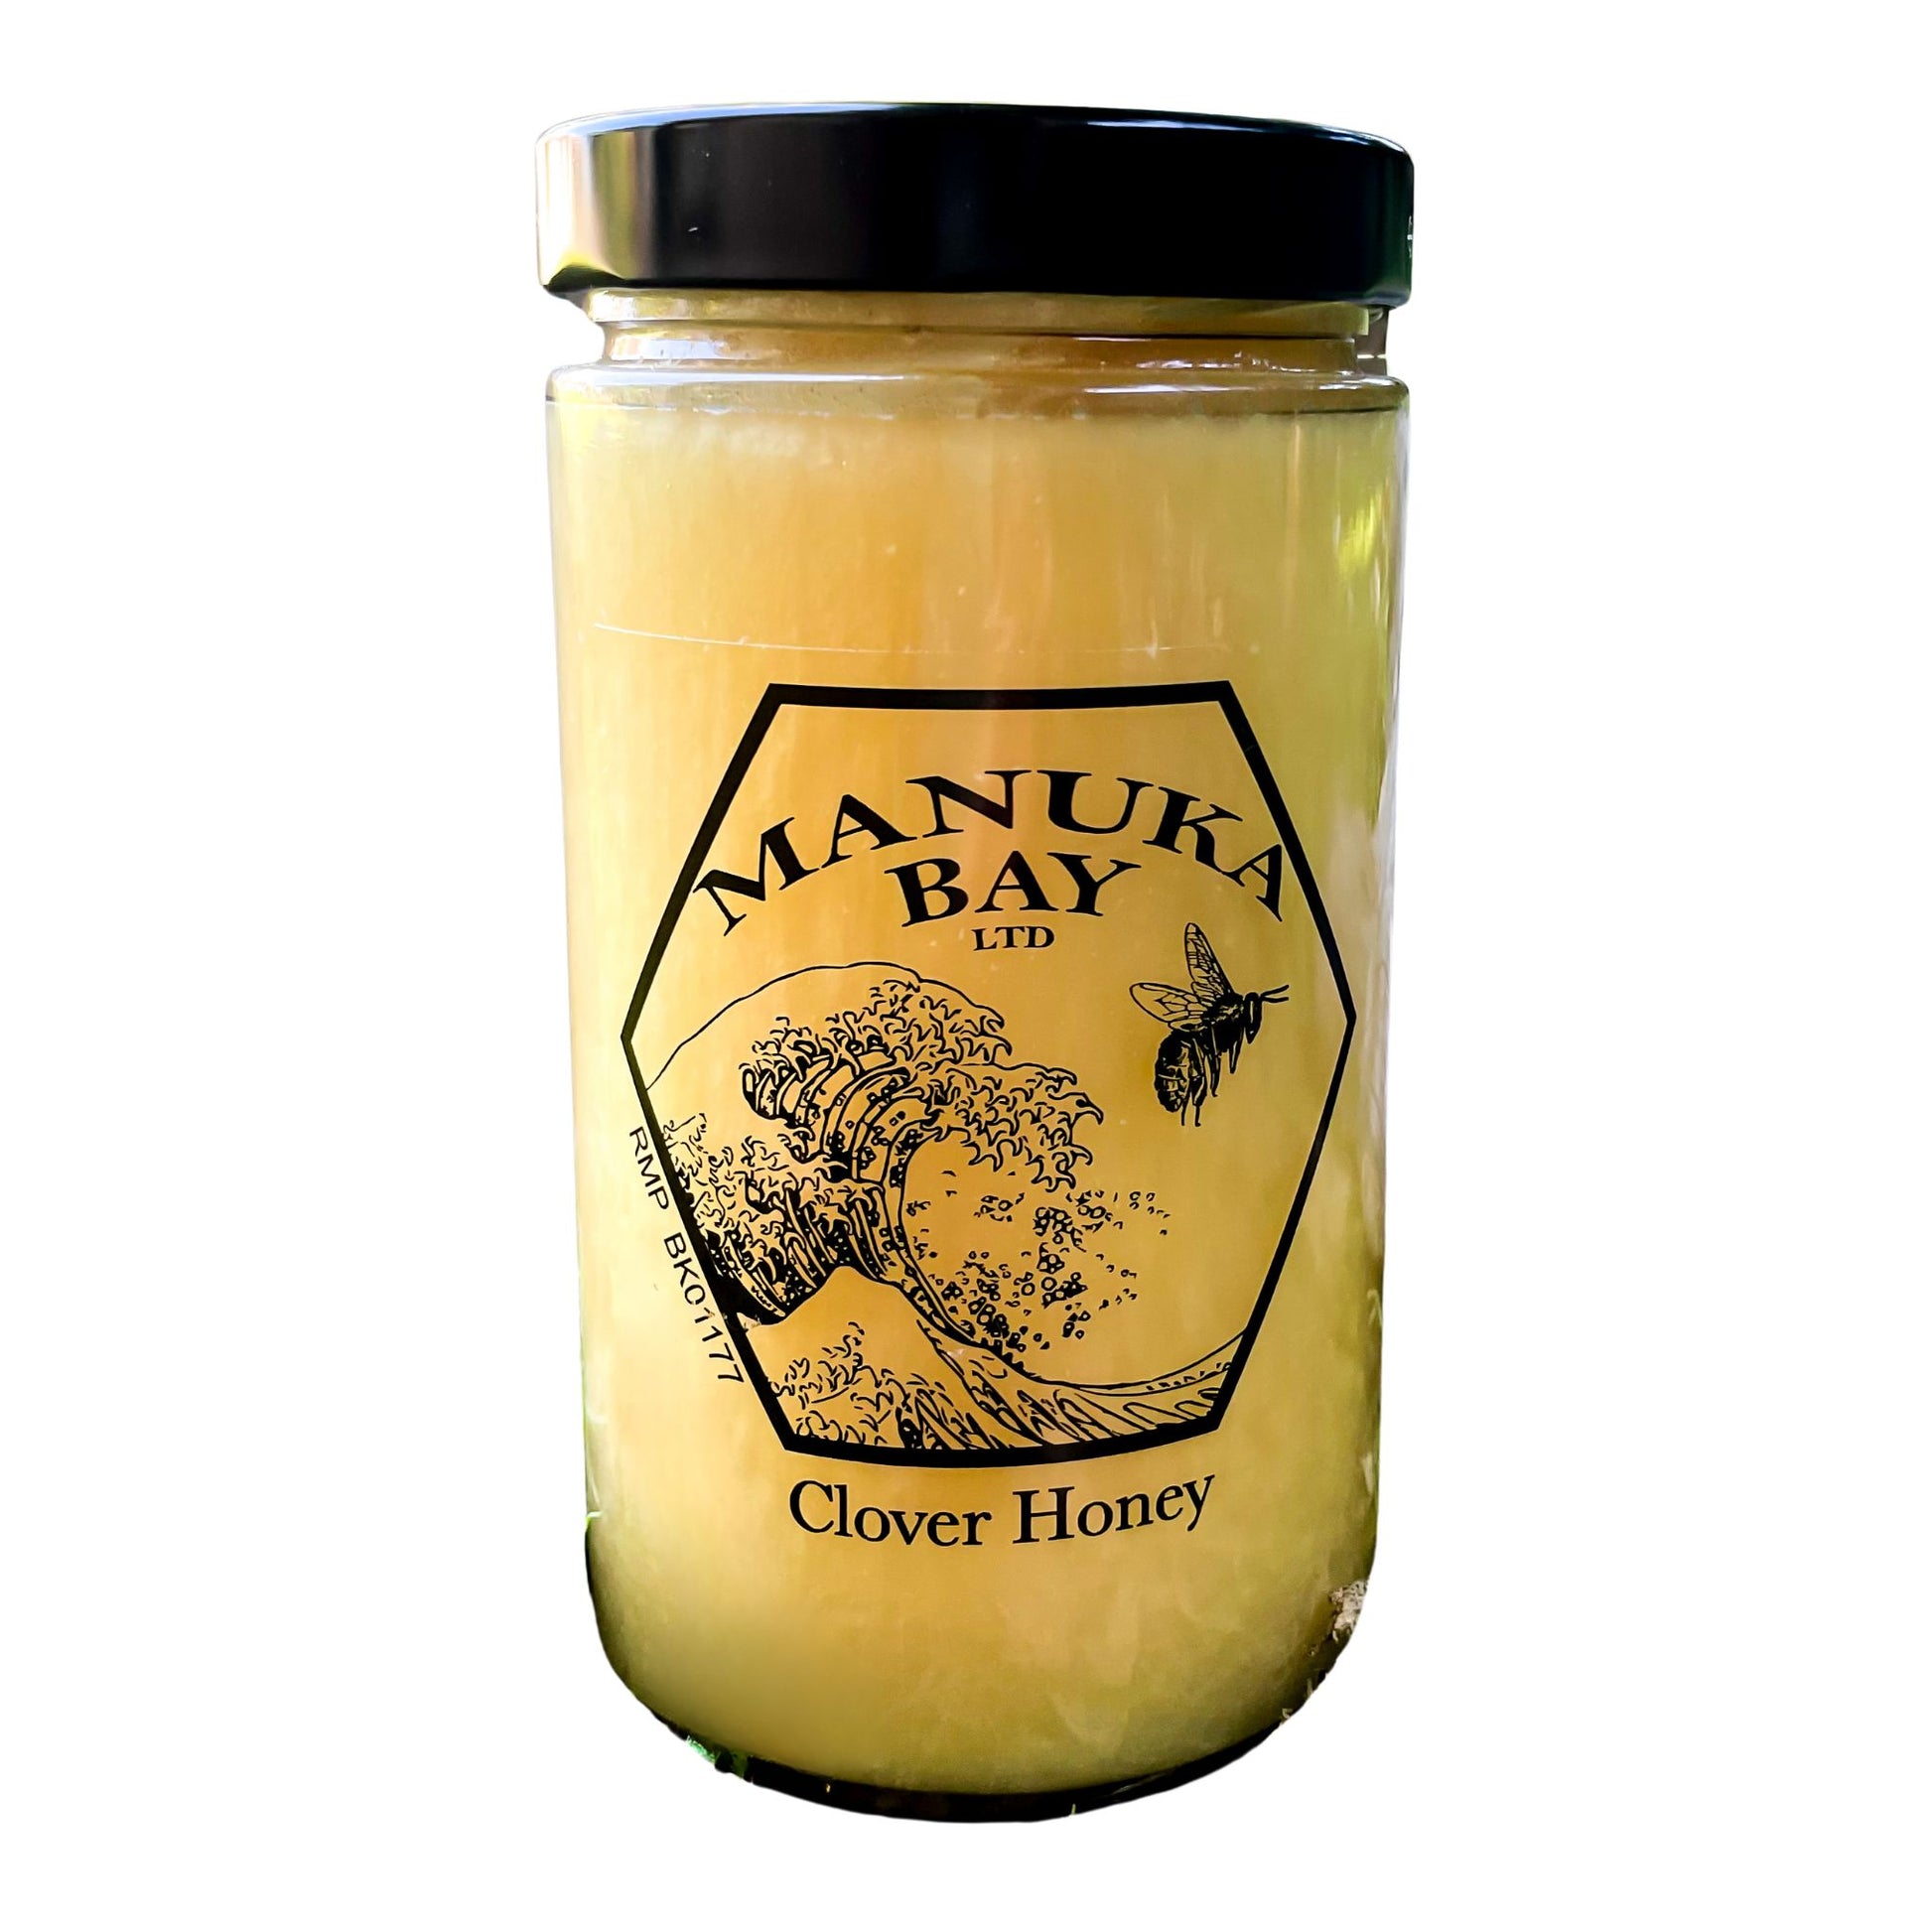 Glass jar with black lid filled with Manuka Bay Clover Honey.